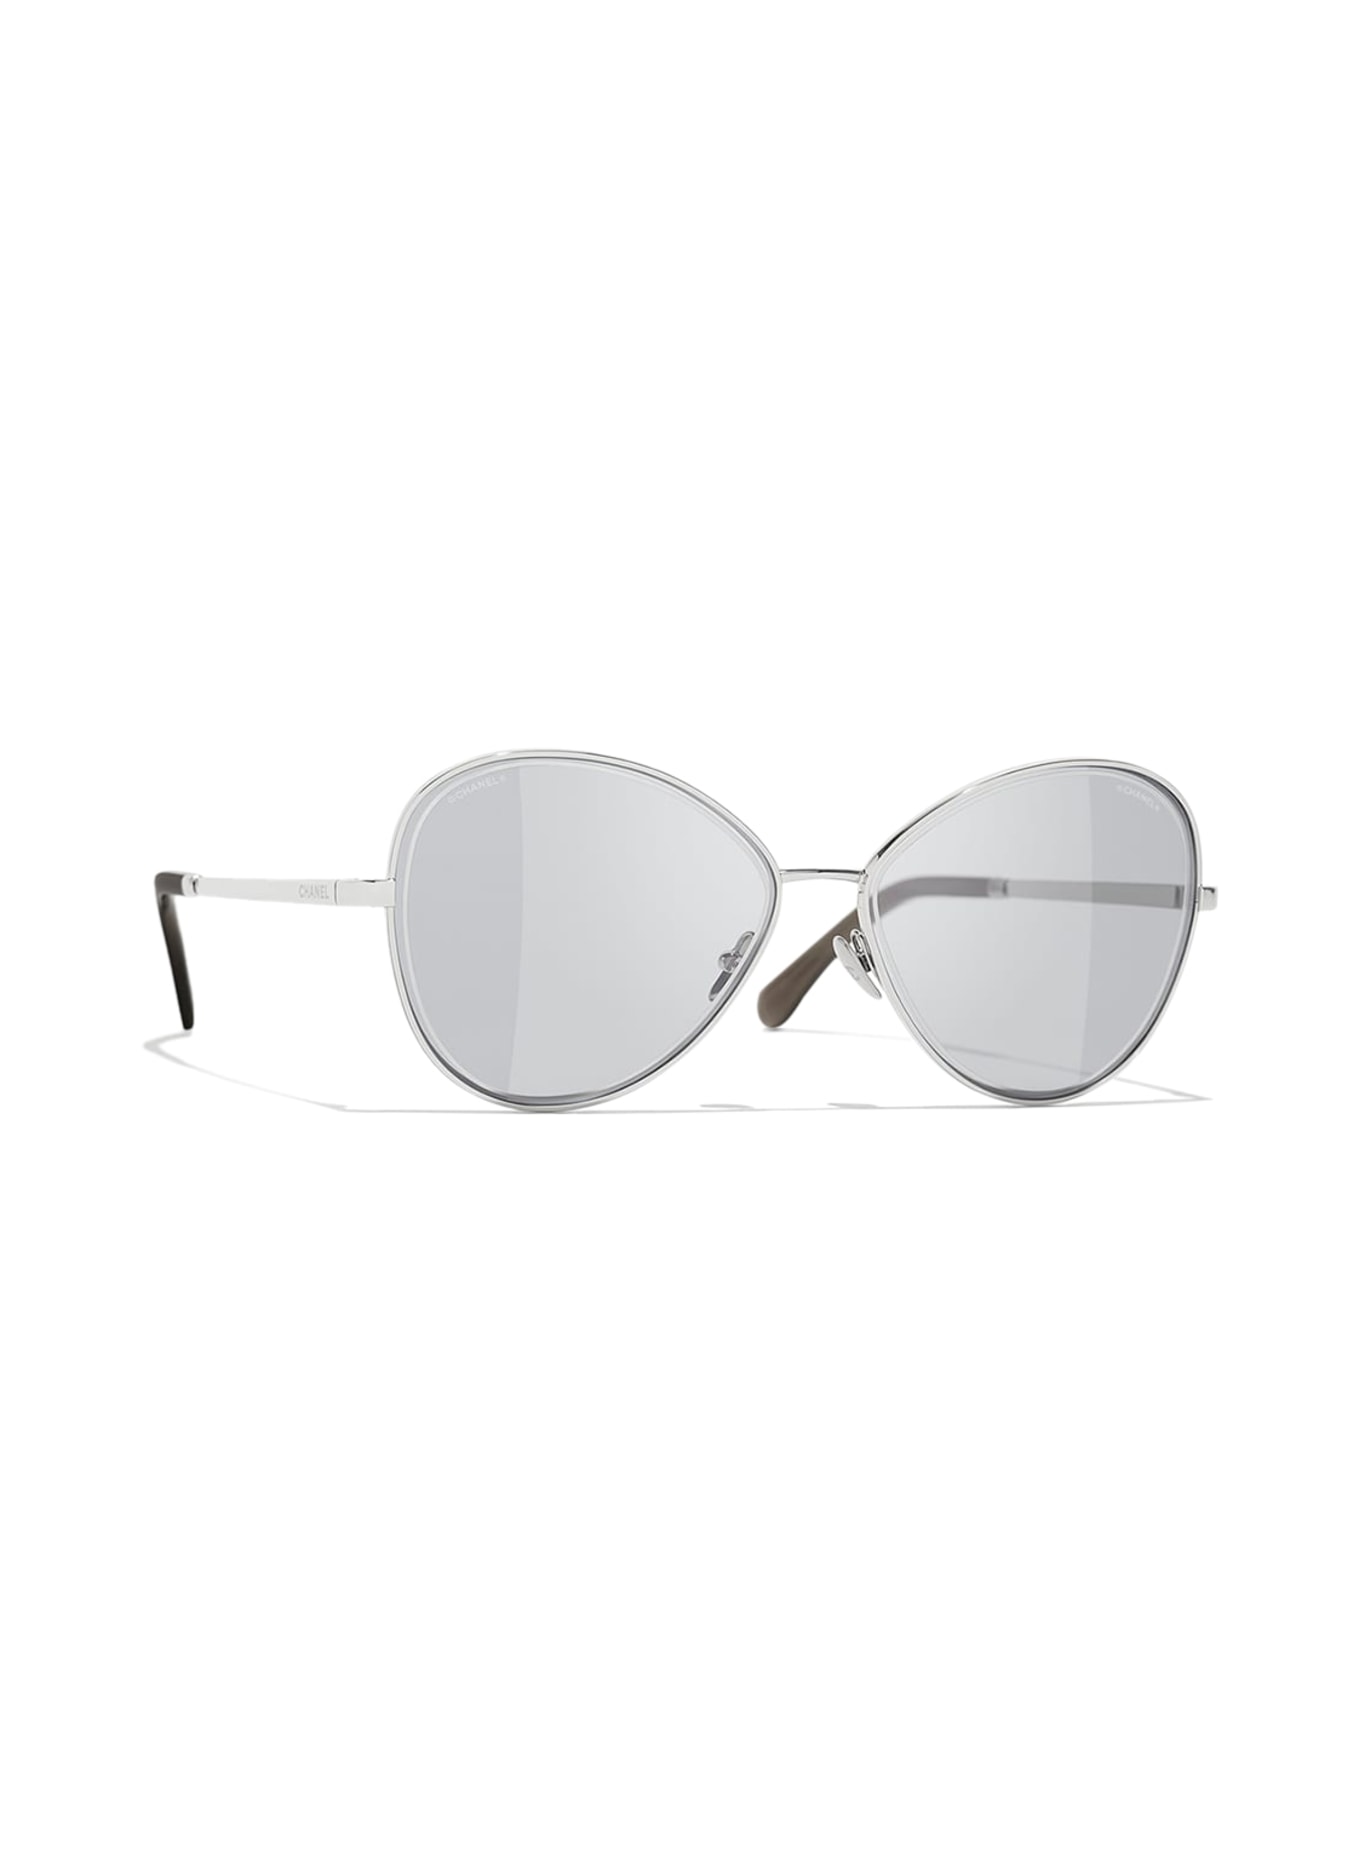 Sunglasses CHANEL CH5477 1724/S2 56-18 Blue in stock, Price 241,67 €